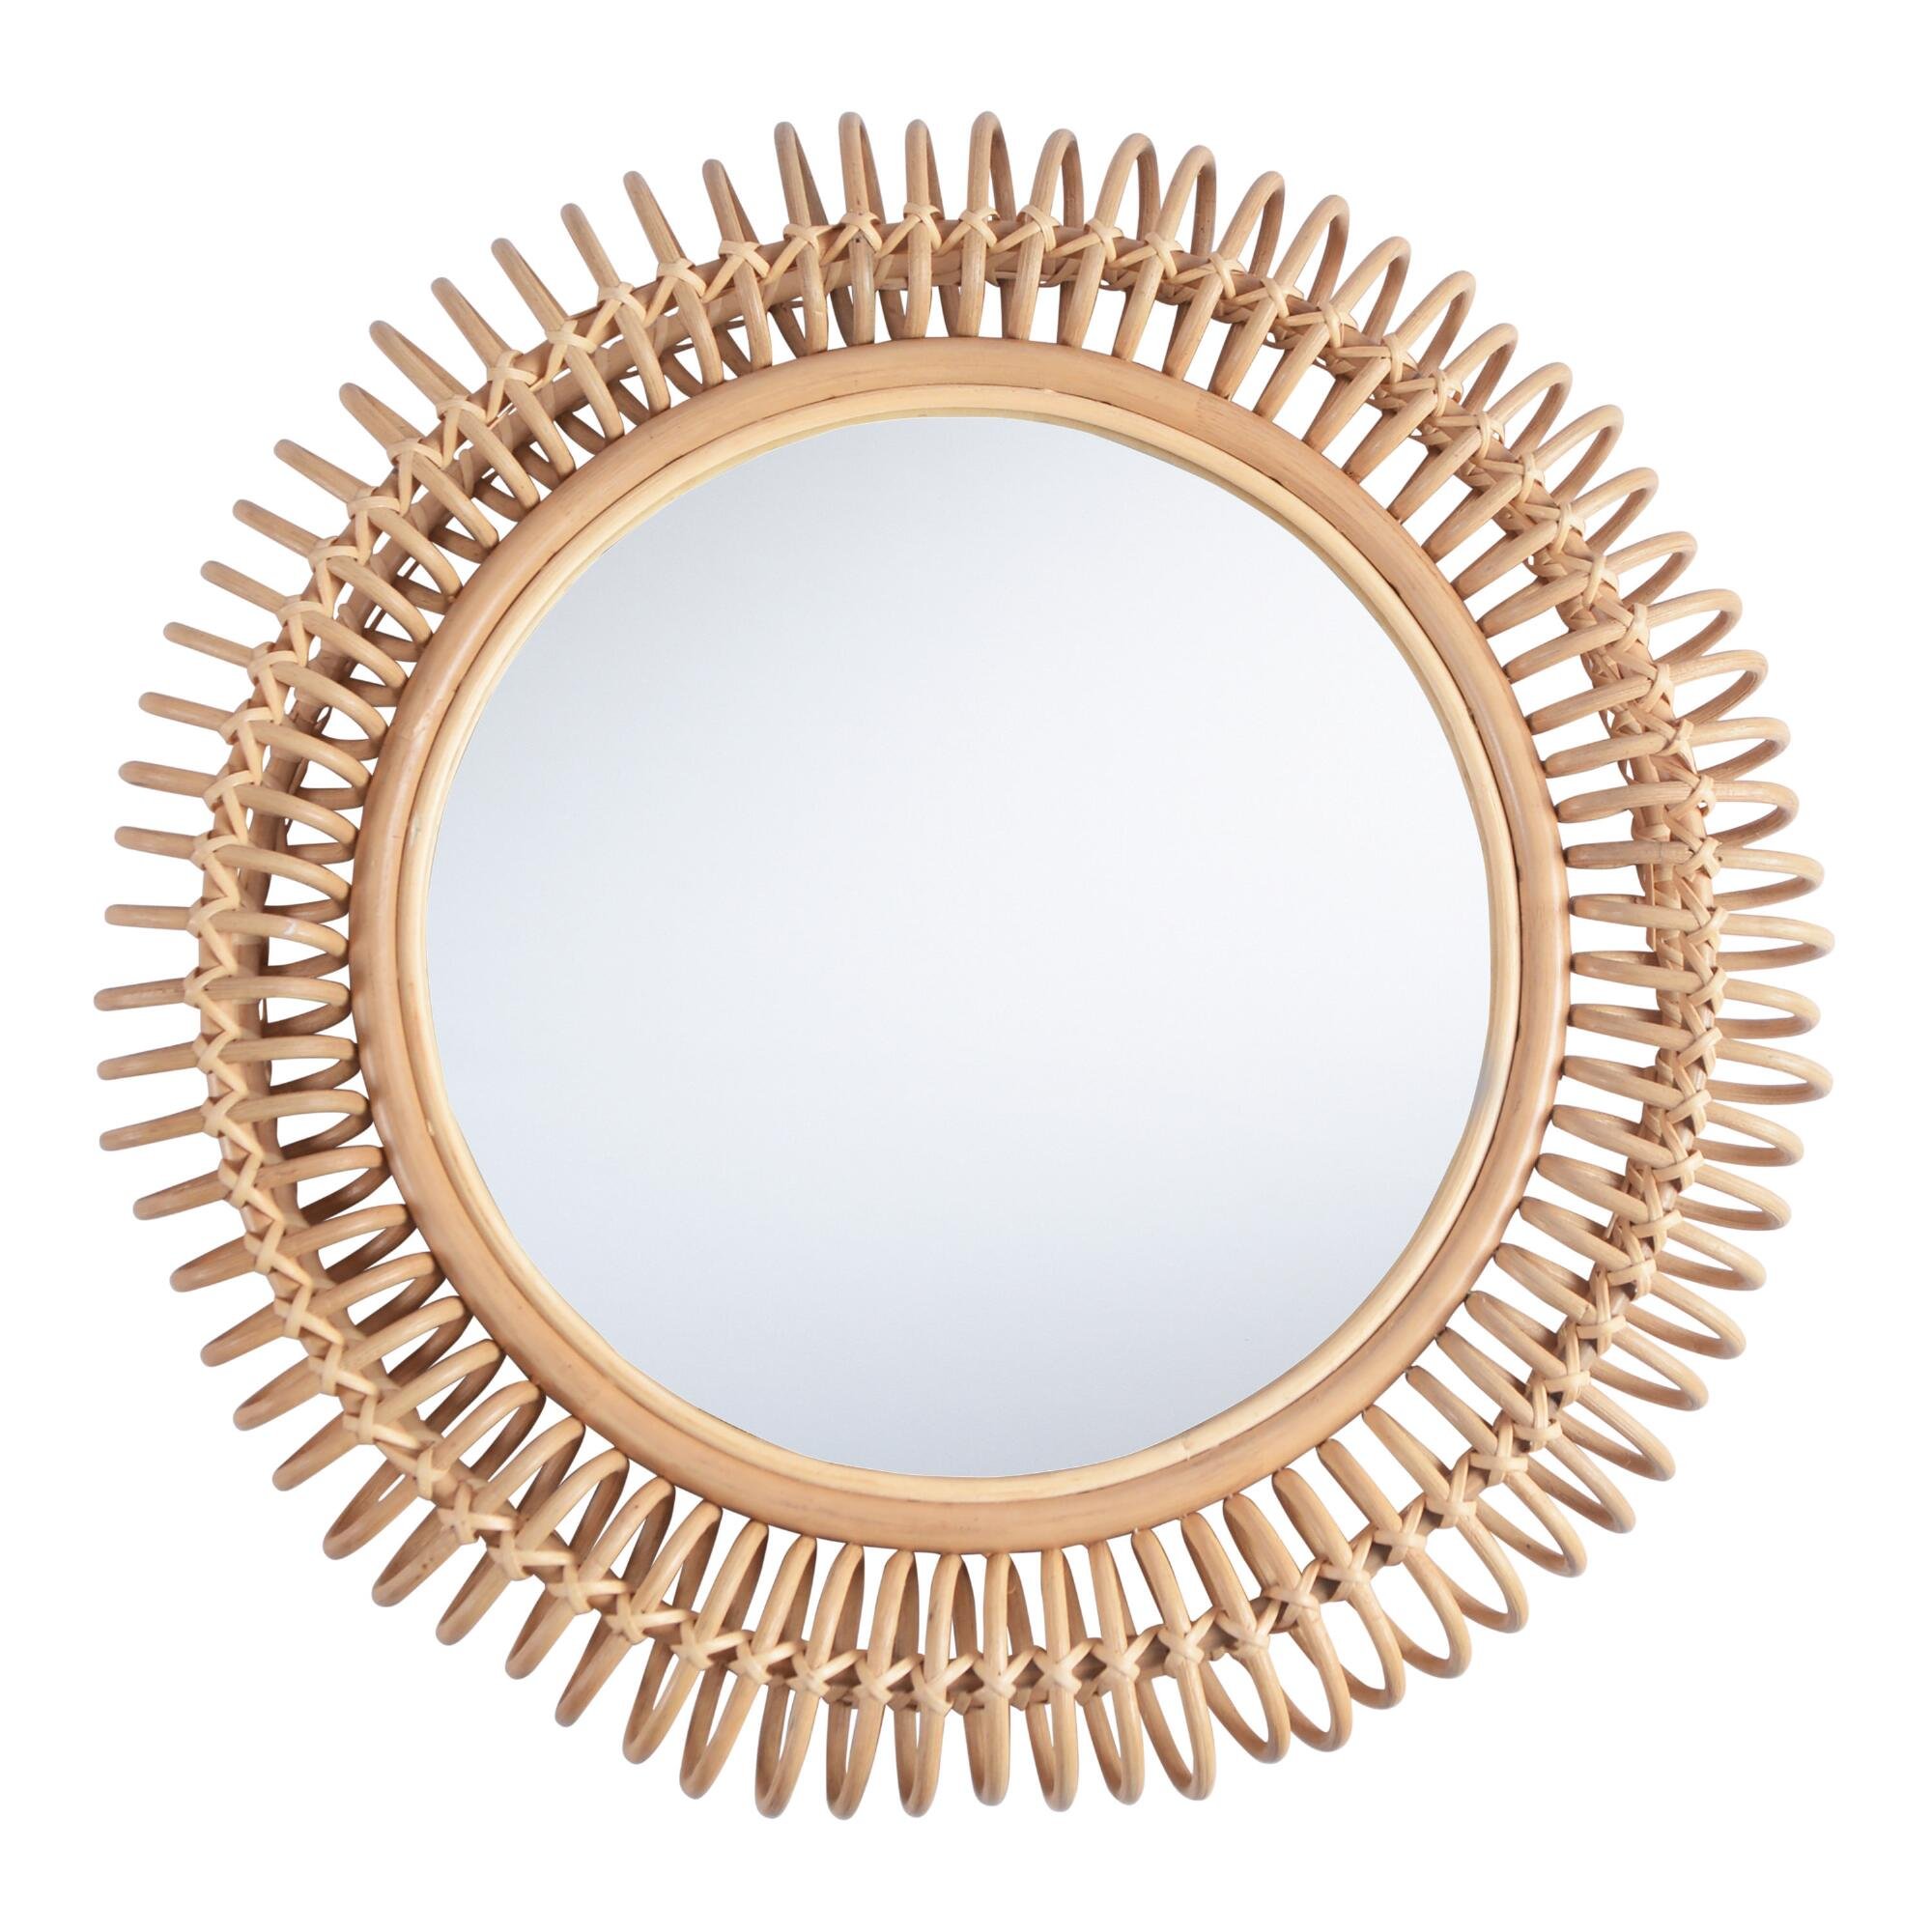 Round Coiled Rattan Mirror